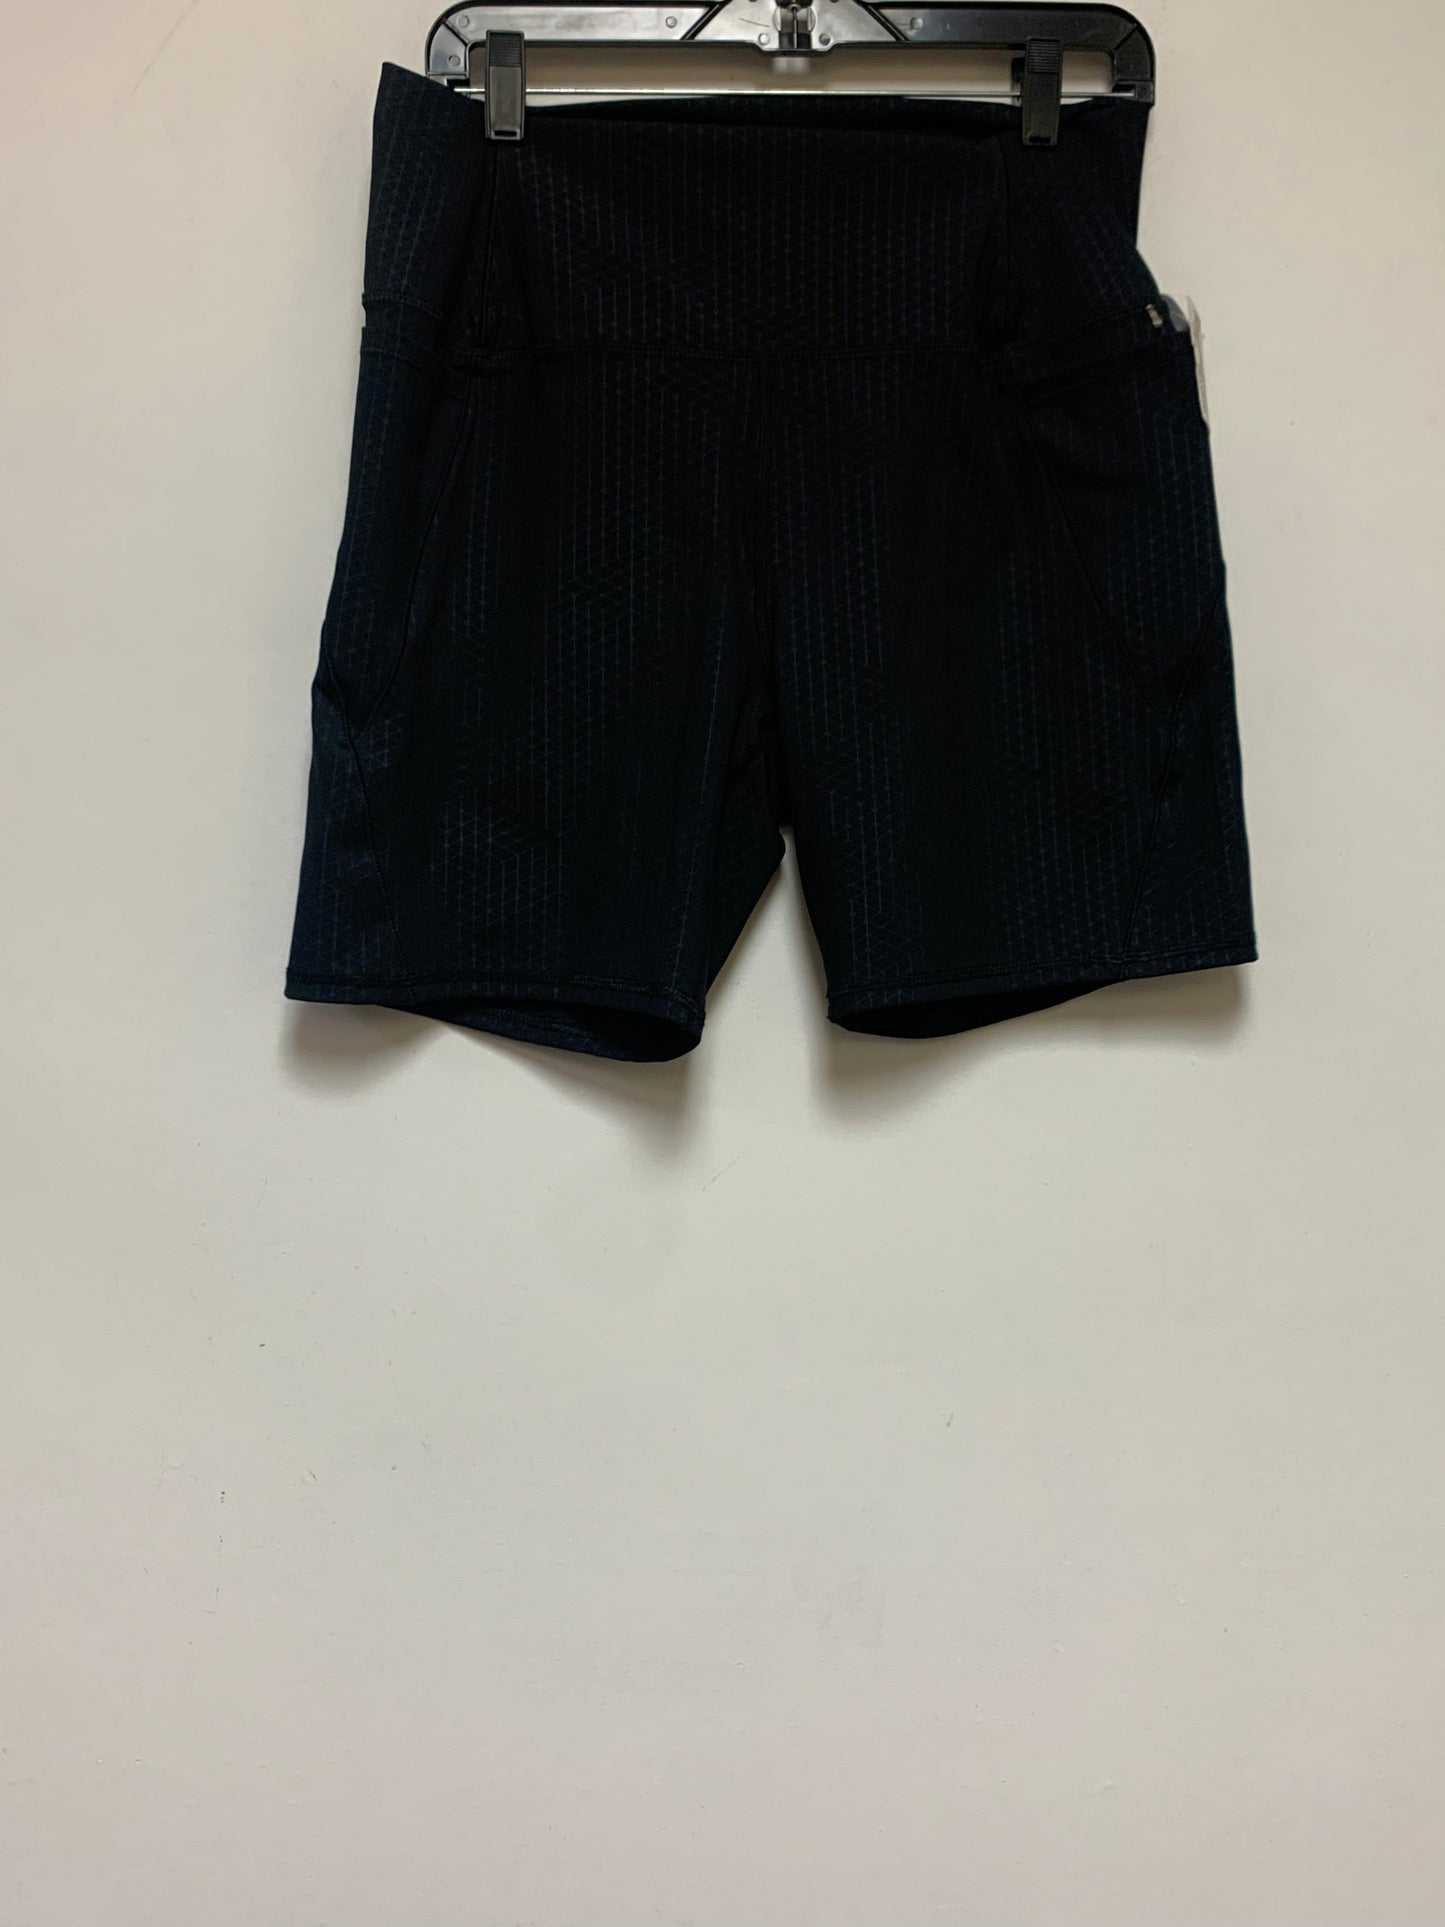 Athletic Shorts 2pc By Spyder  Size: Xl